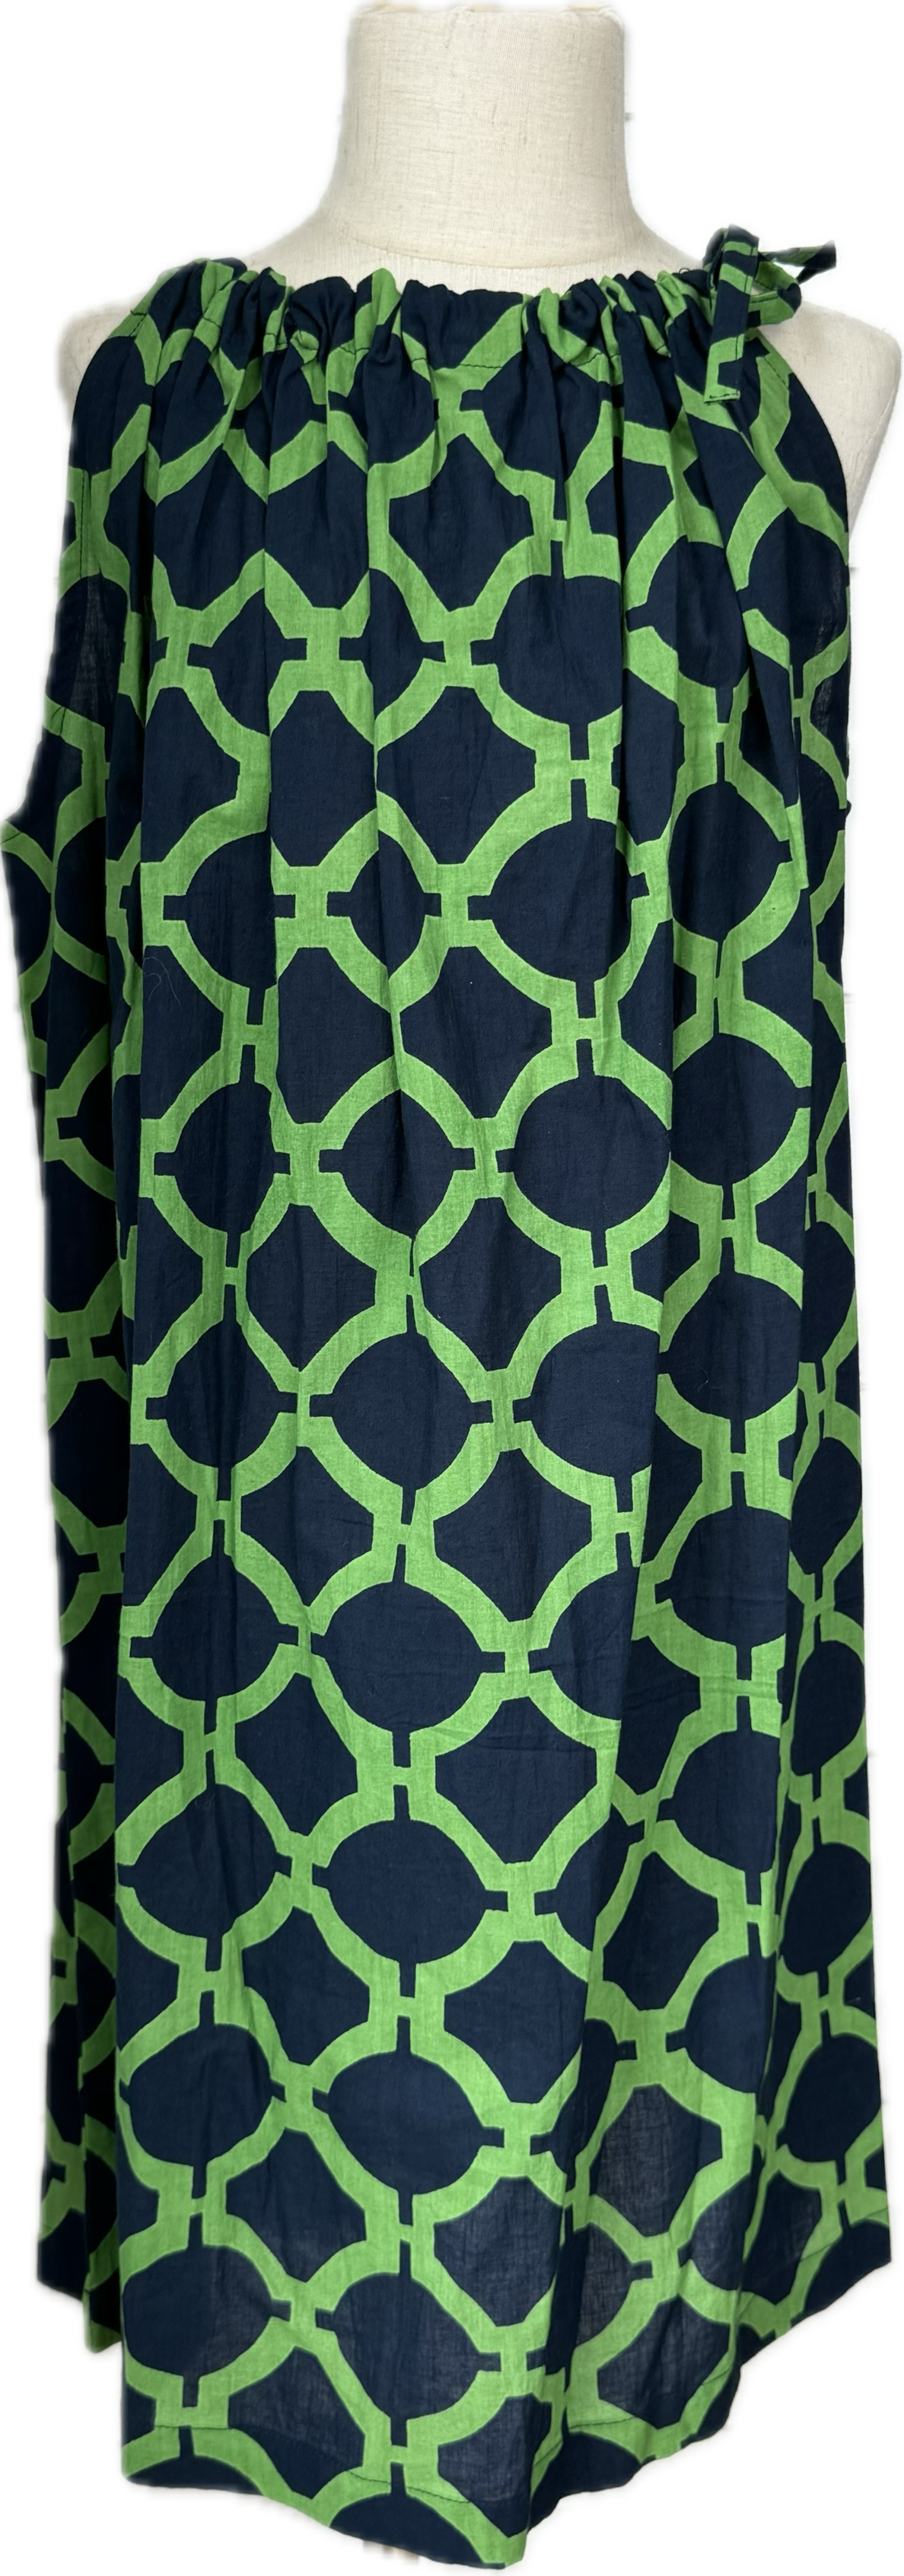 Lexi York NWT Handkerchief Dress, Navy/Green Girls Size M/L